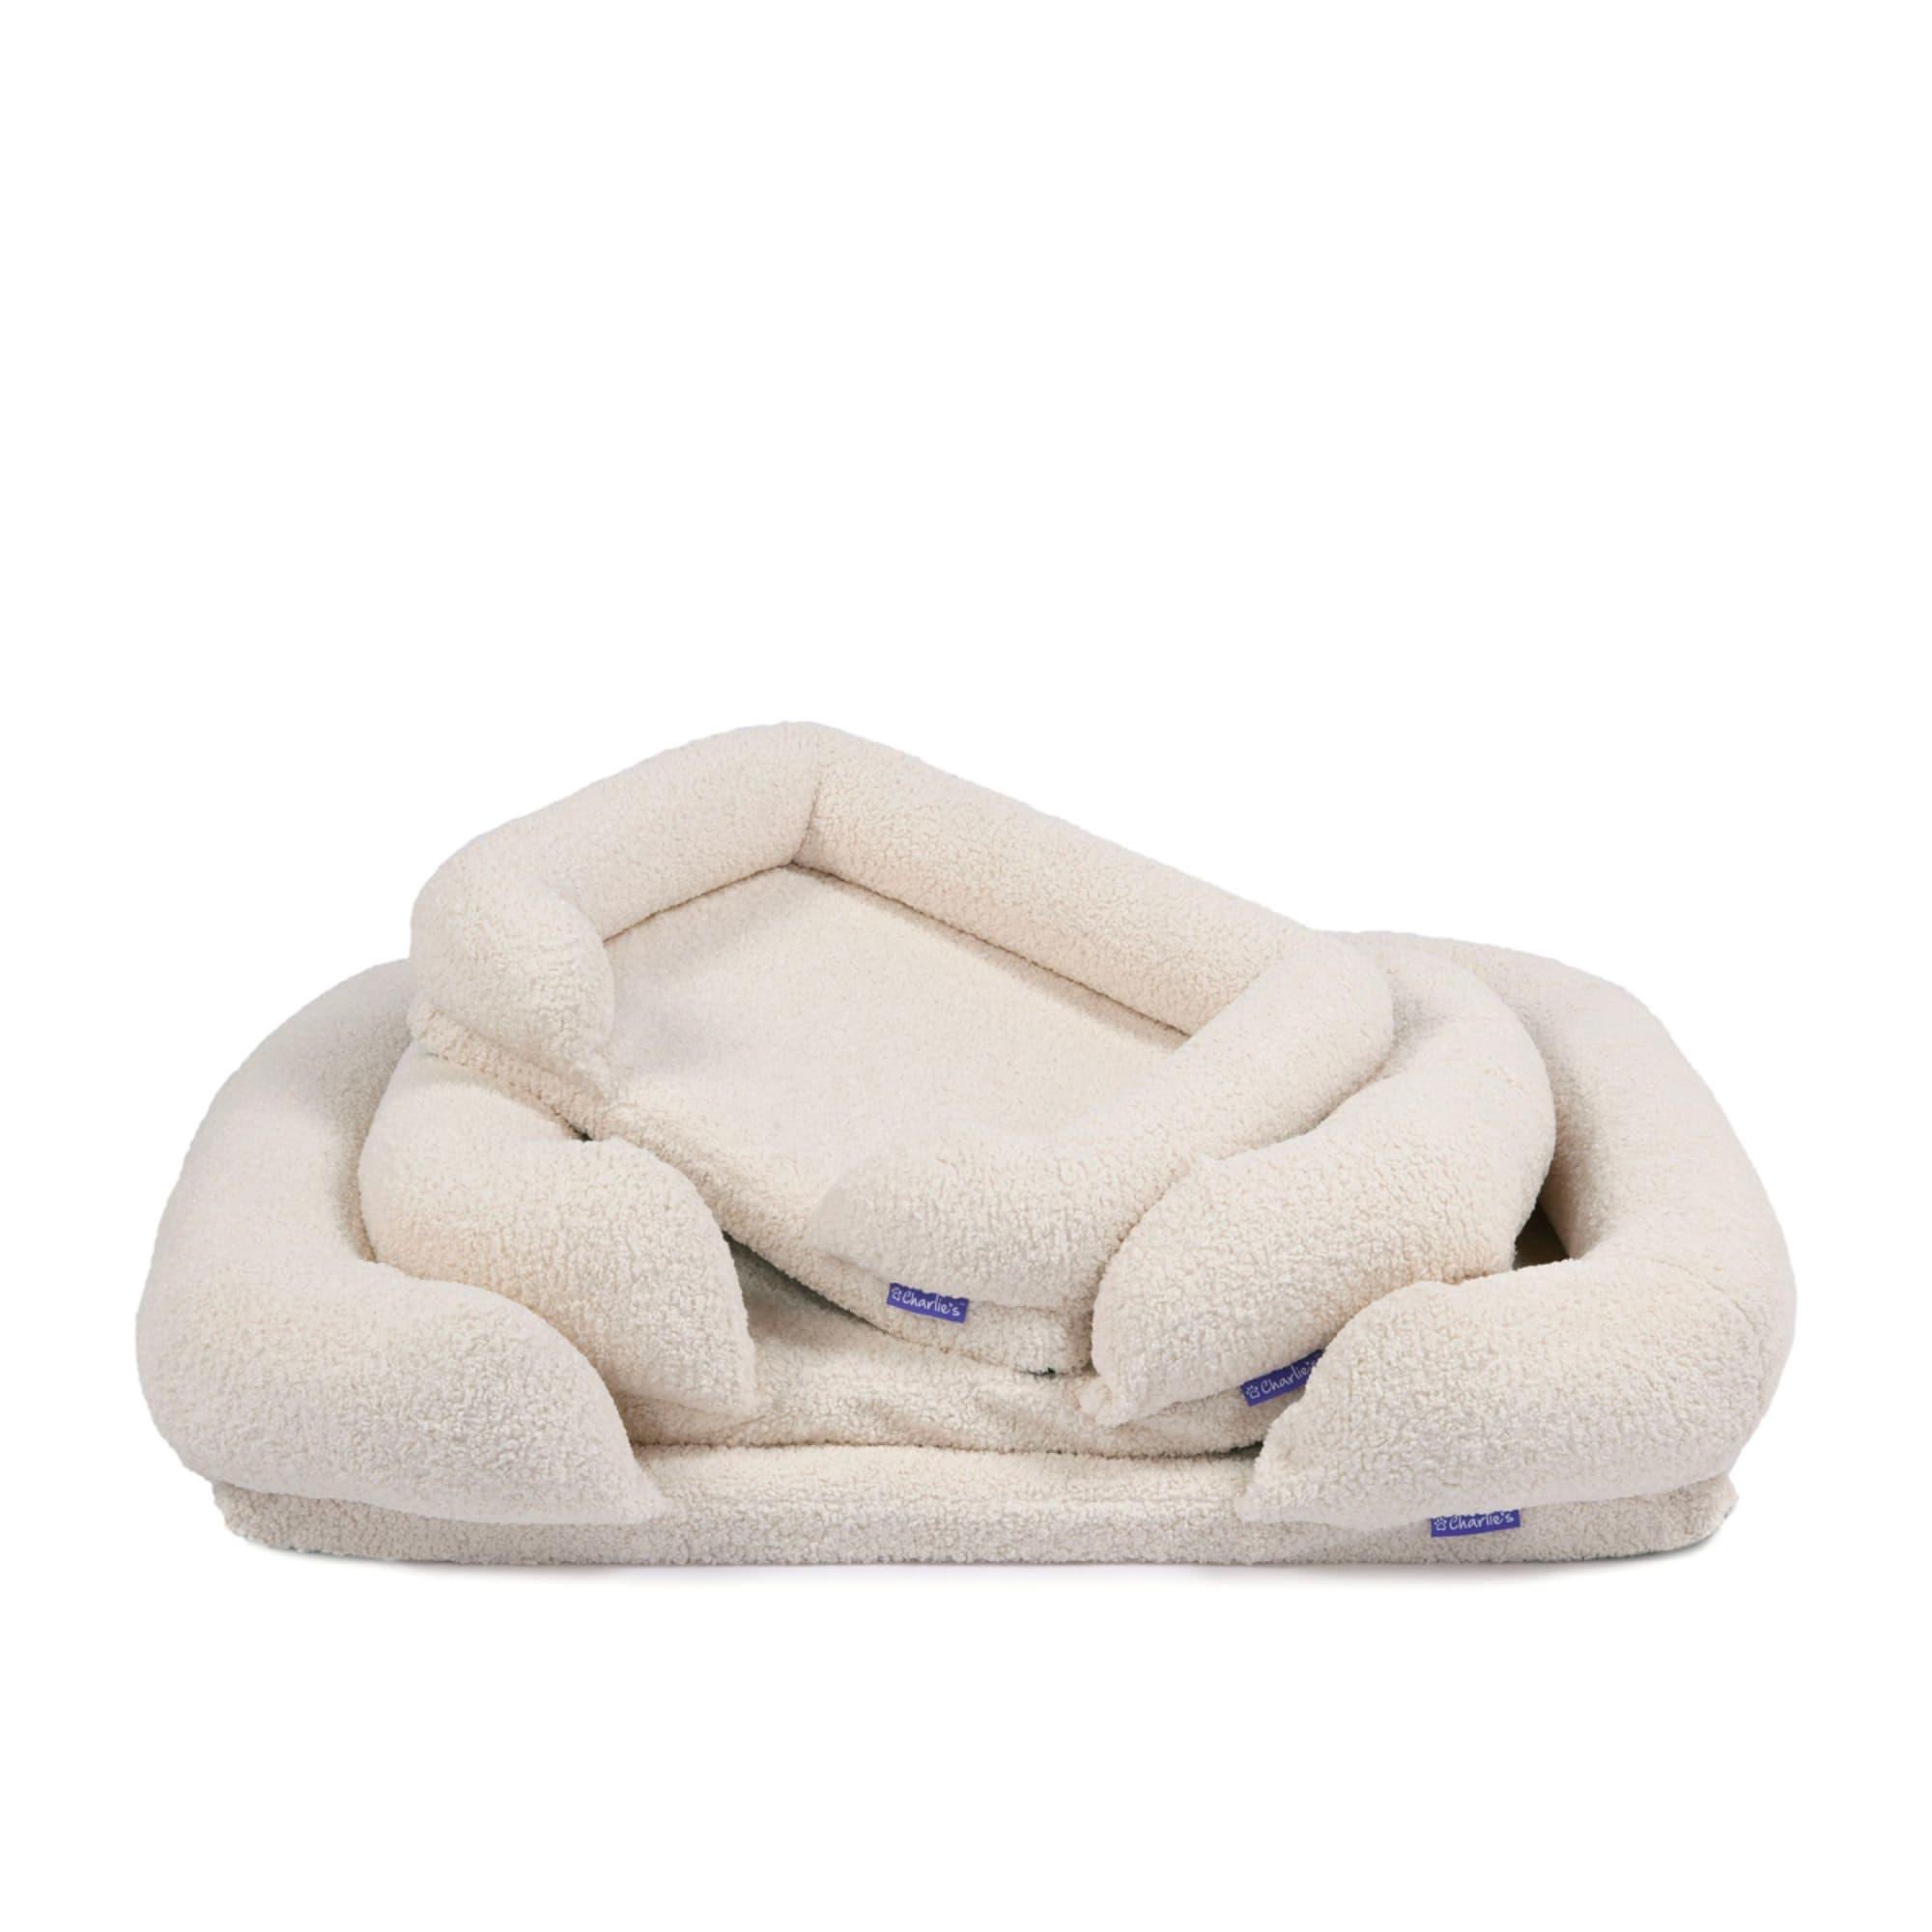 Charlie's Teddy Fleece Orthopedic Memory Foam Sofa Dog Bed Large Cream Image 6